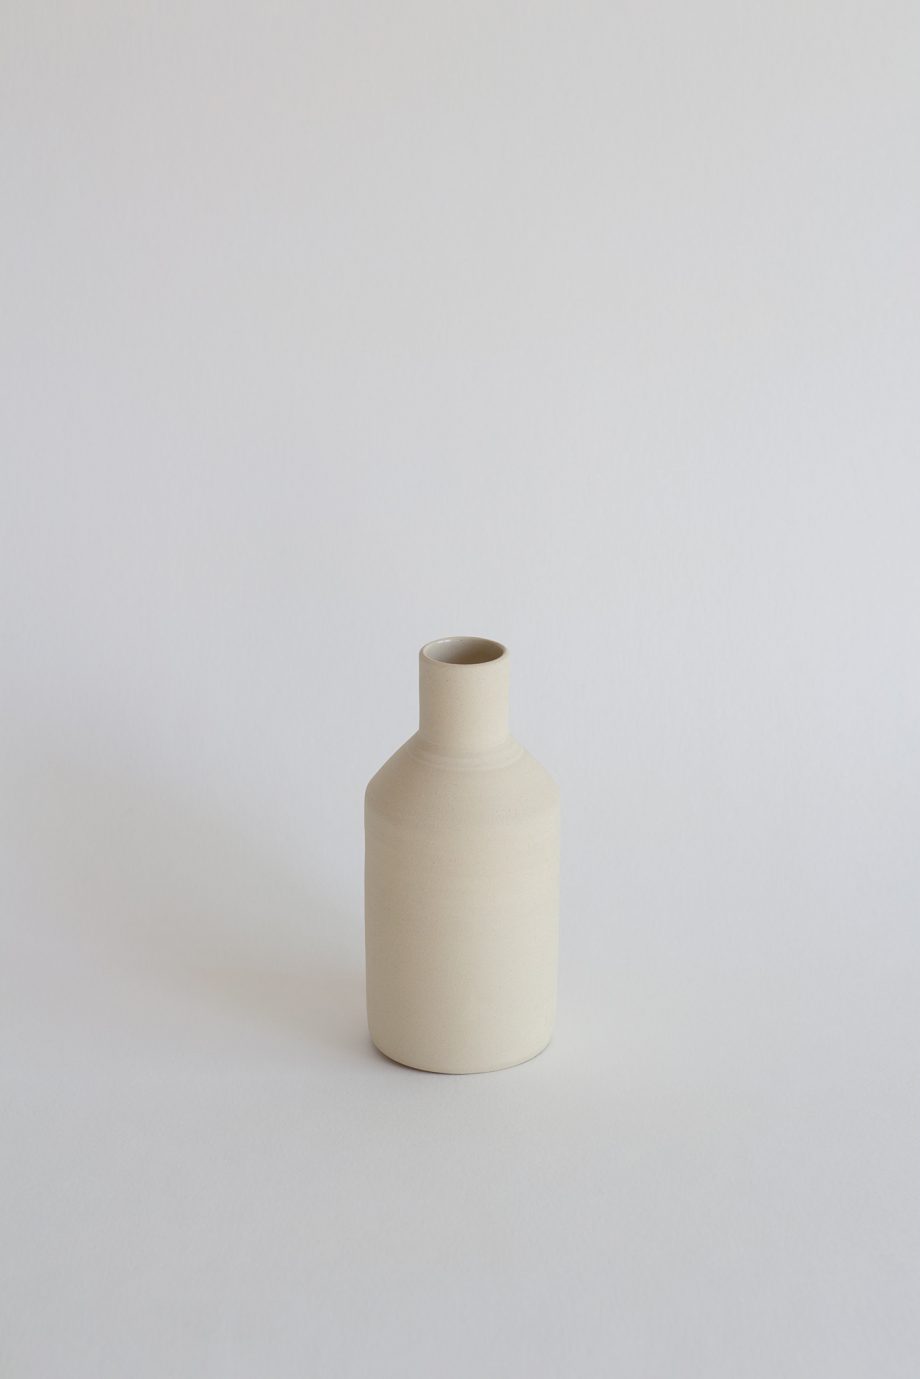 Small decorative vase in natural stoneware from Portuguese handicraft brand o cactuu.